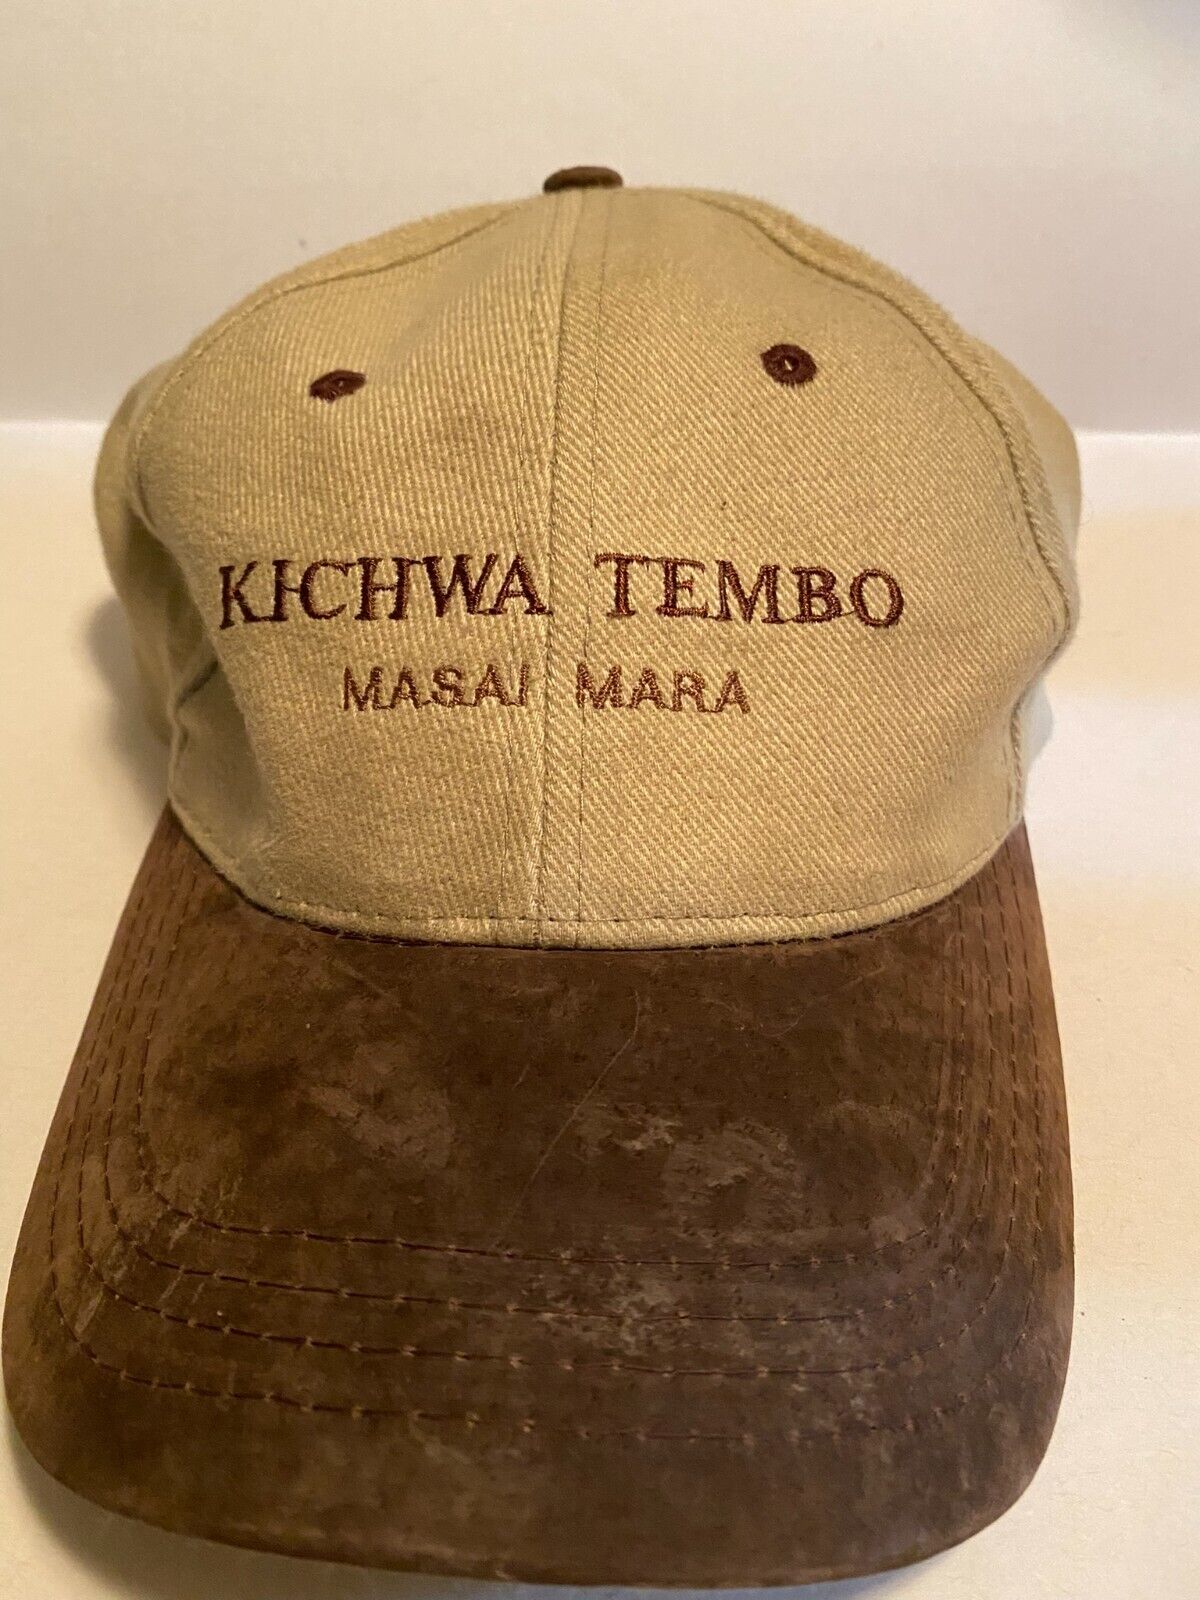 Kichwa Tembo Cap Tan w/Suede brown bill